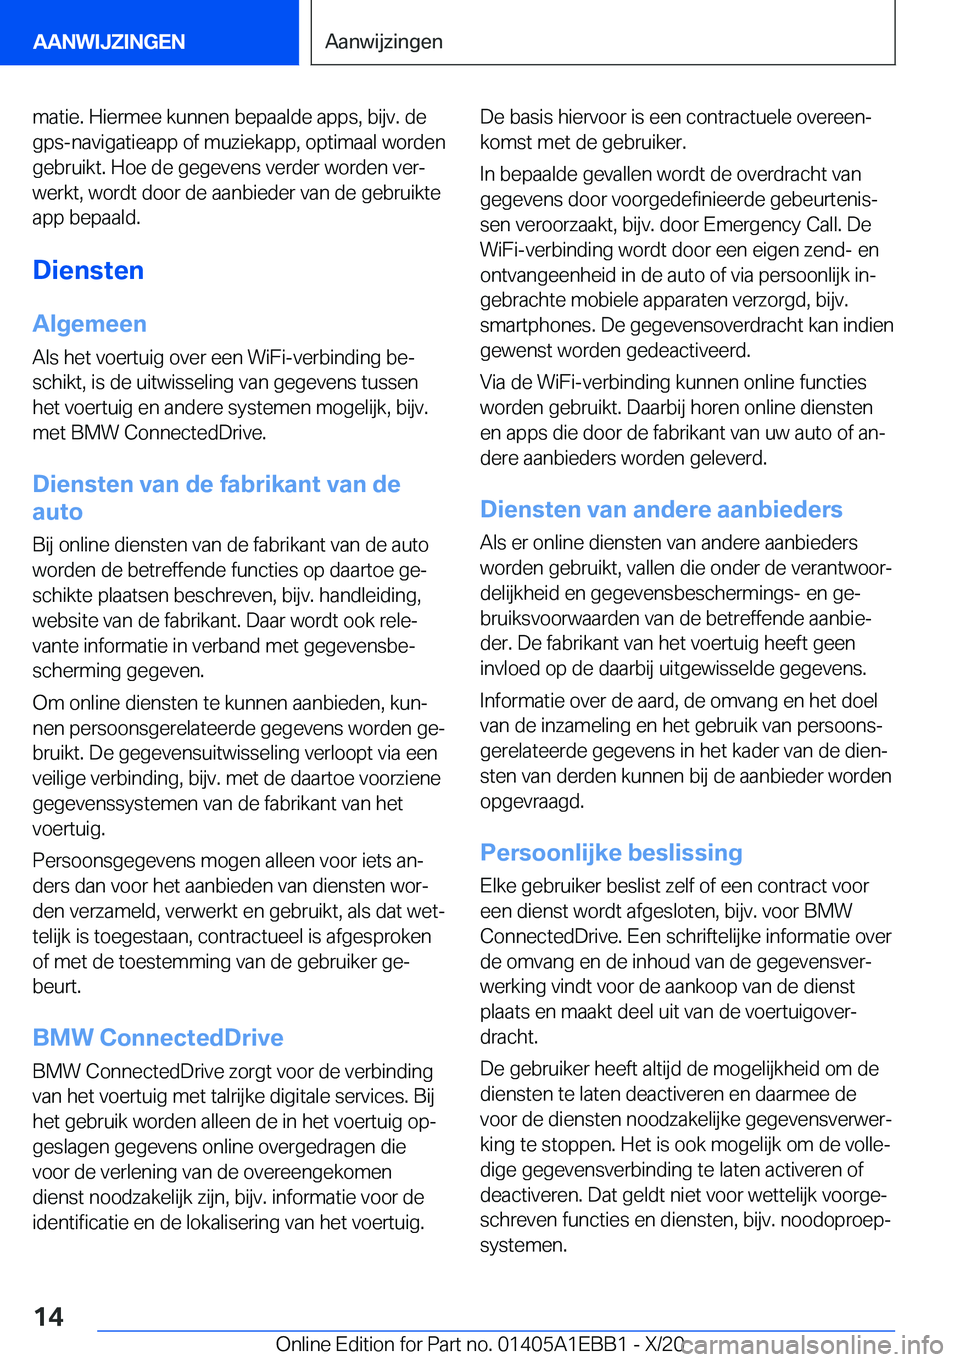 BMW 3 SERIES 2021  Instructieboekjes (in Dutch) �m�a�t�i�e�.��H�i�e�r�m�e�e��k�u�n�n�e�n��b�e�p�a�a�l�d�e��a�p�p�s�,��b�i�j�v�.��d�e
�g�p�s�-�n�a�v�i�g�a�t�i�e�a�p�p��o�f��m�u�z�i�e�k�a�p�p�,��o�p�t�i�m�a�a�l��w�o�r�d�e�n �g�e�b�r�u�i�k�t